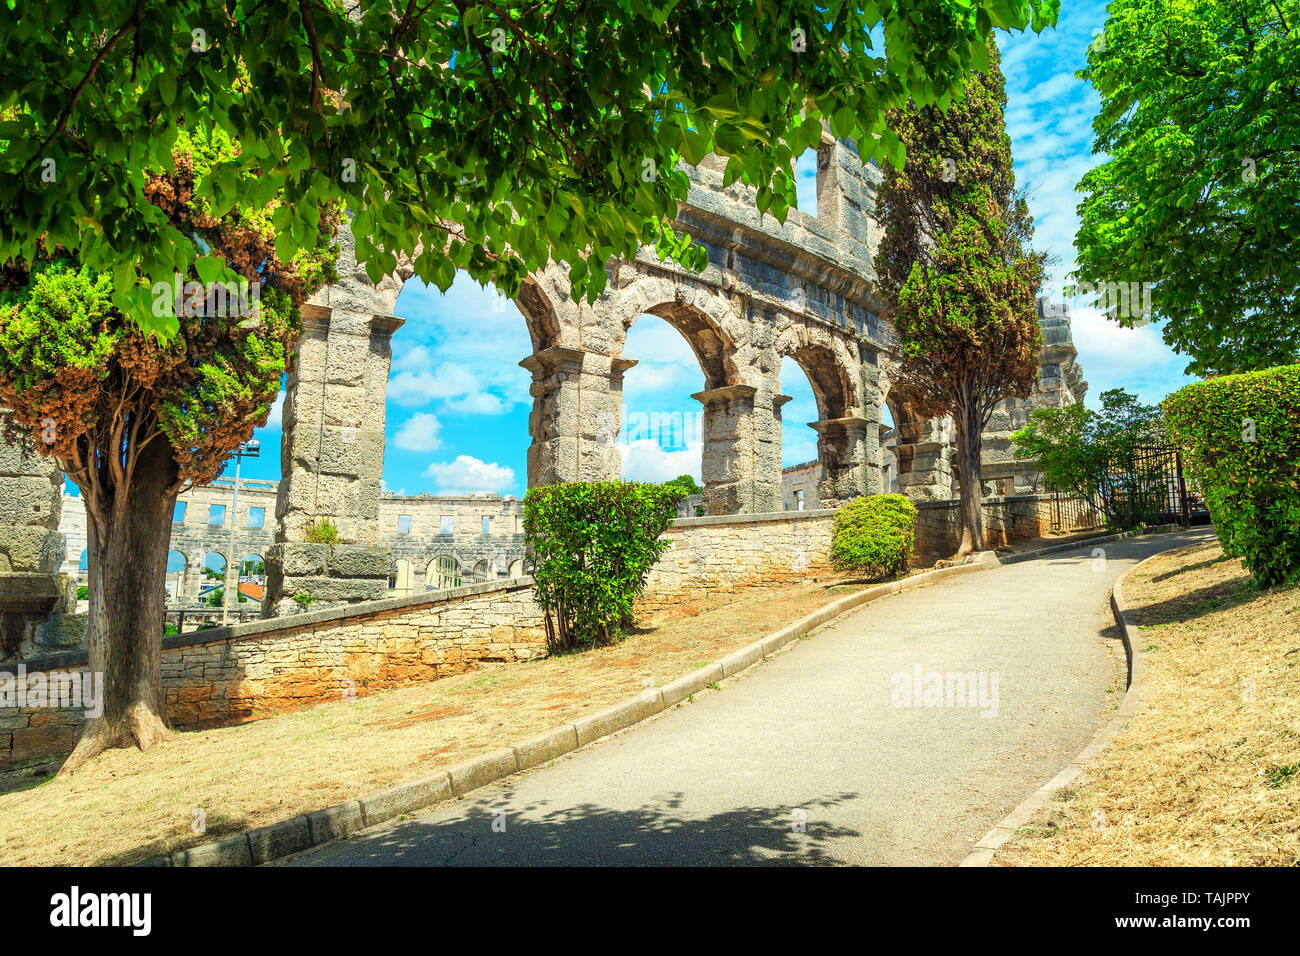 Wonderful travel and touristic location, famous landmark with Roman amphitheatre (Arena) in Pula town, Istria peninsula, Croatia, Europe Stock Photo